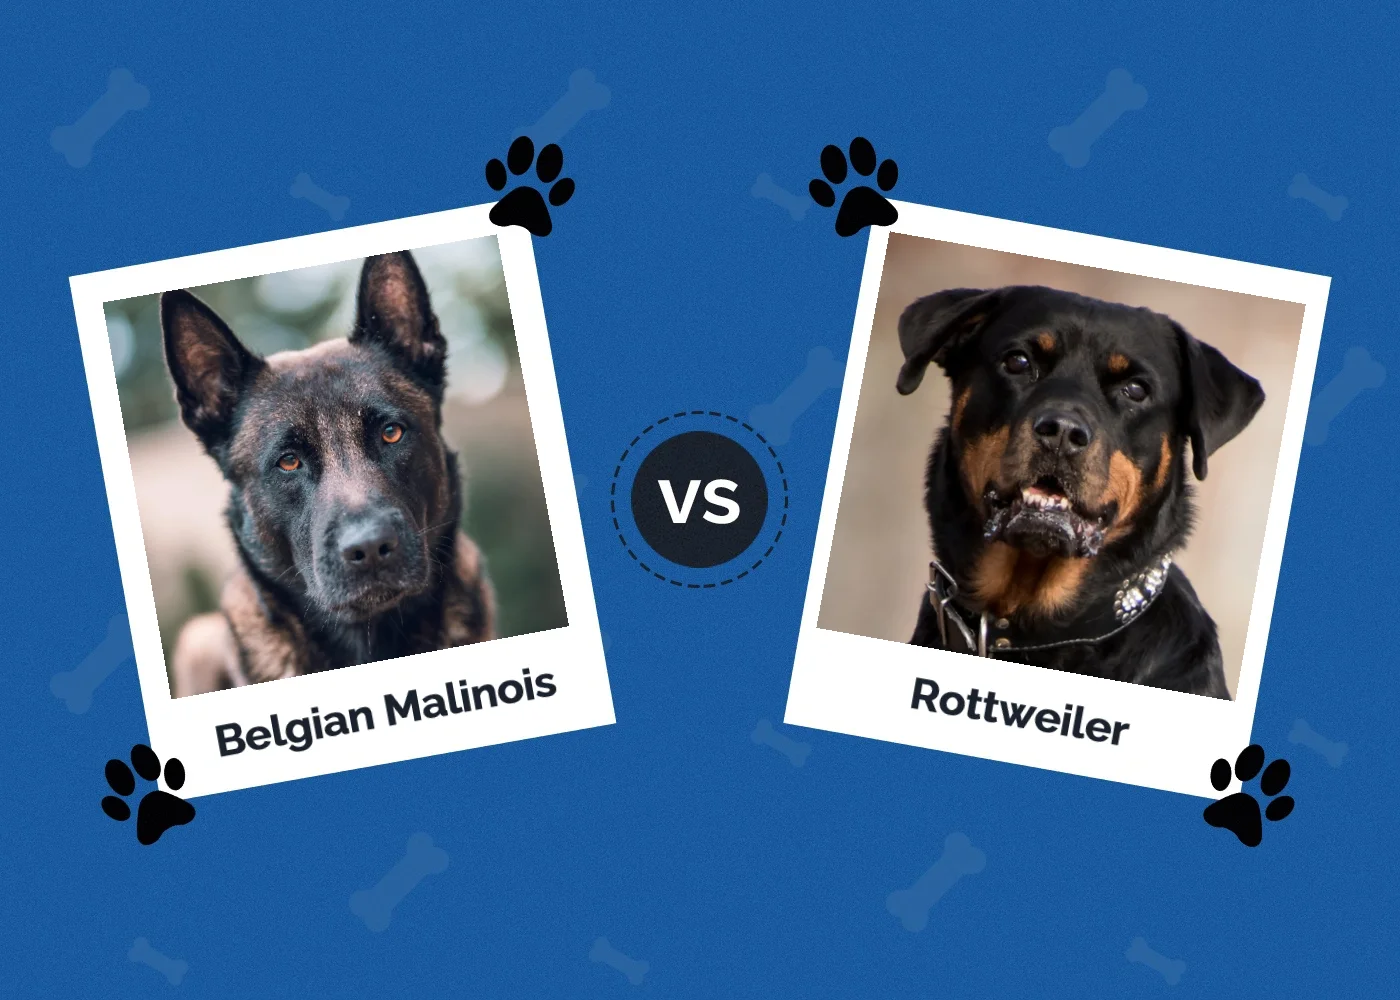 Belgian Malinois vs Rottweiler - Featured Image